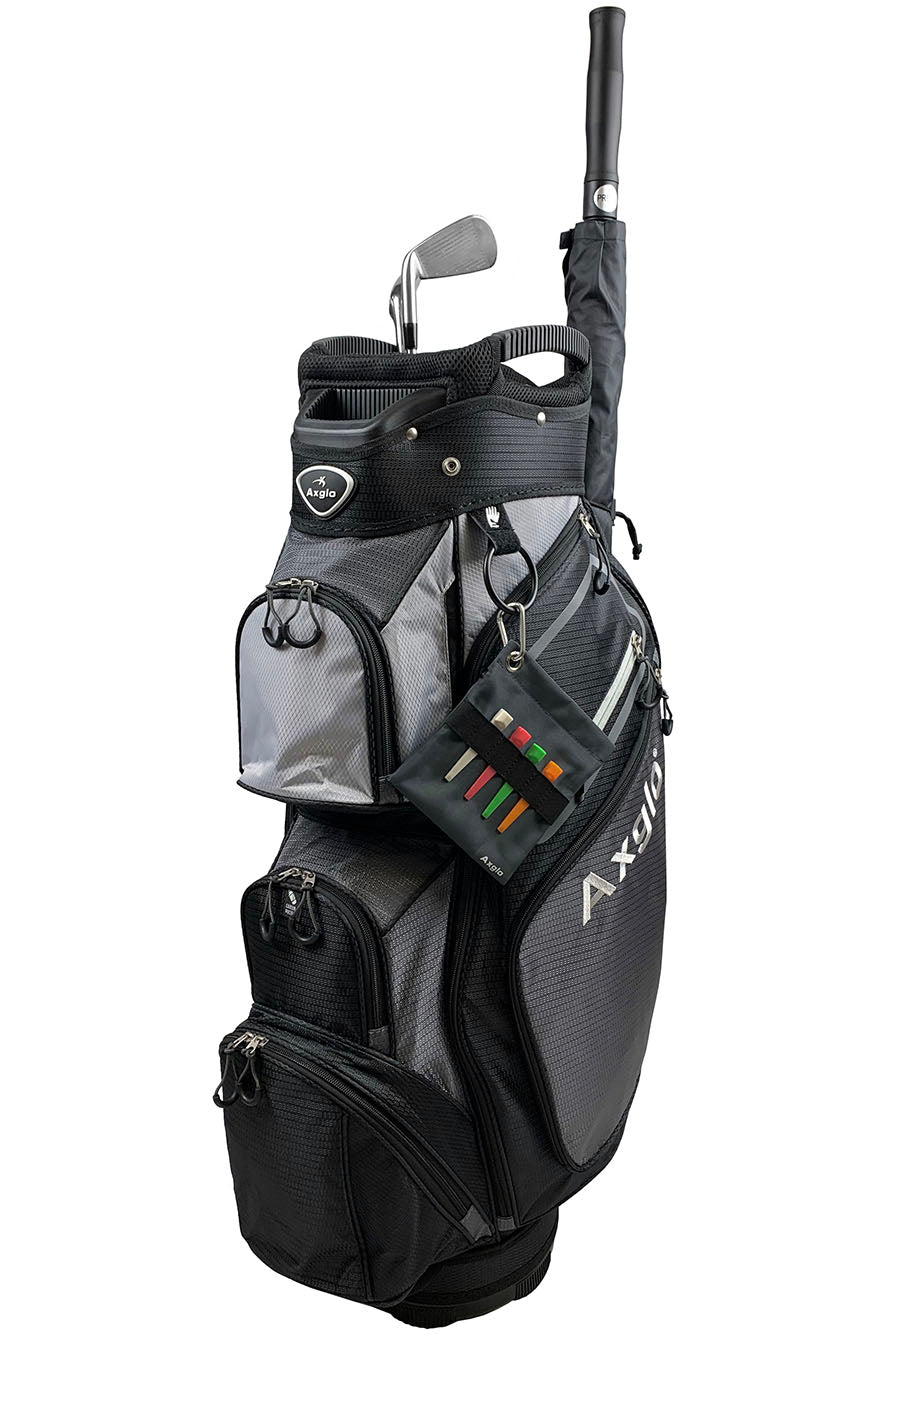 Axglo Golf Cart Bag - Grey/Grey with golf accessories